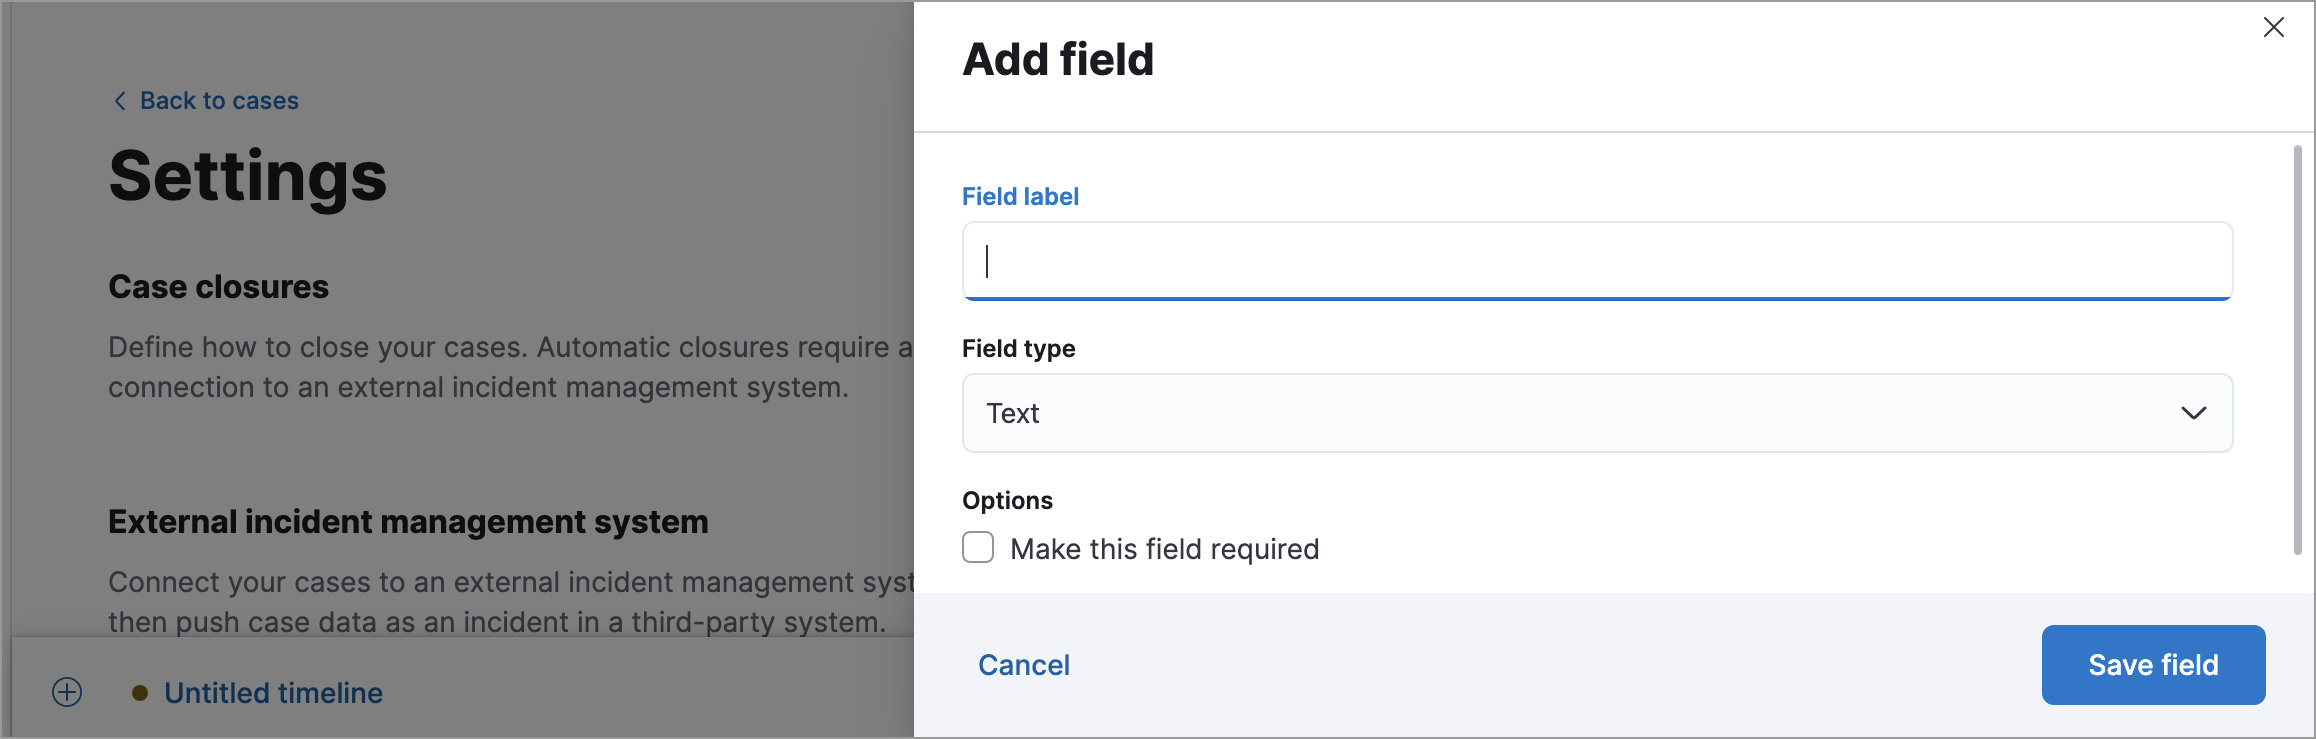 Add custom fields to cases